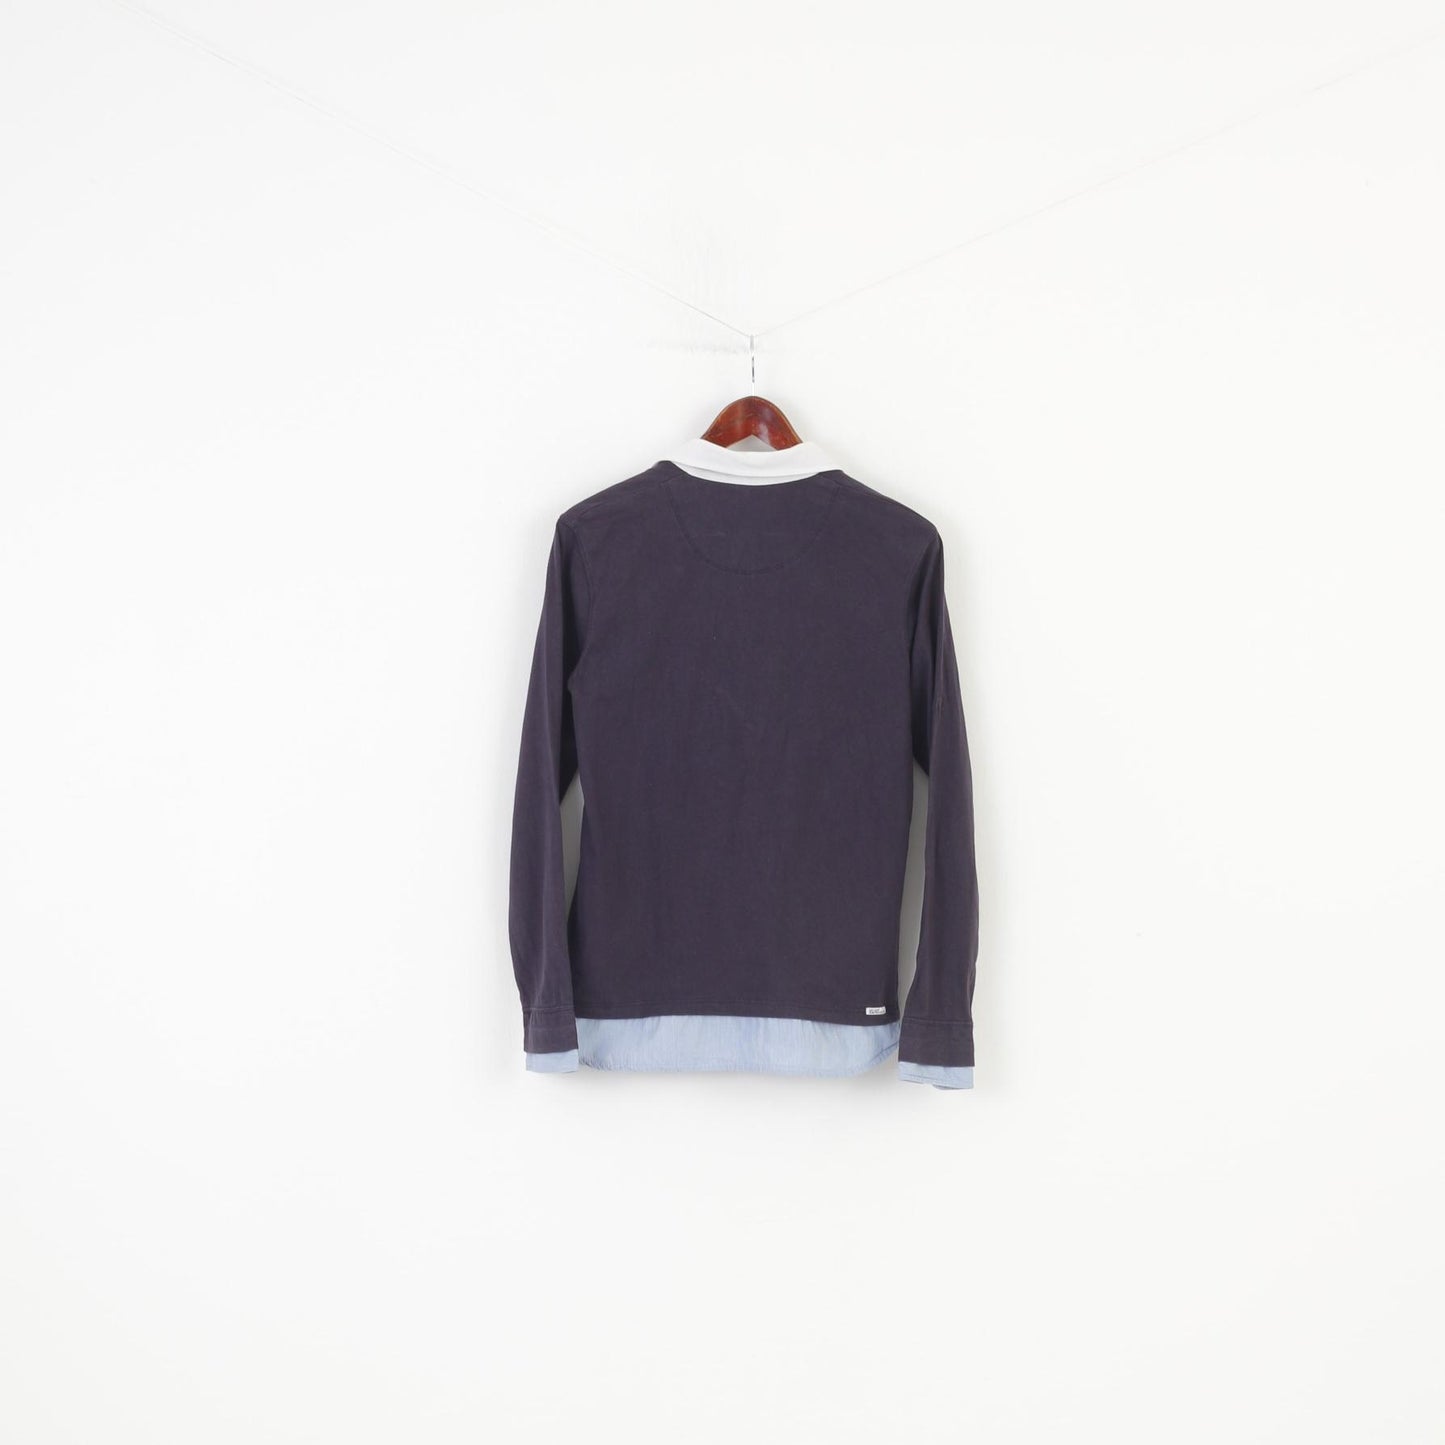 Timberland Boys 16 Age M Polo Shirt Navy Blue Long Sleeve Cotton Collar Elegant Top